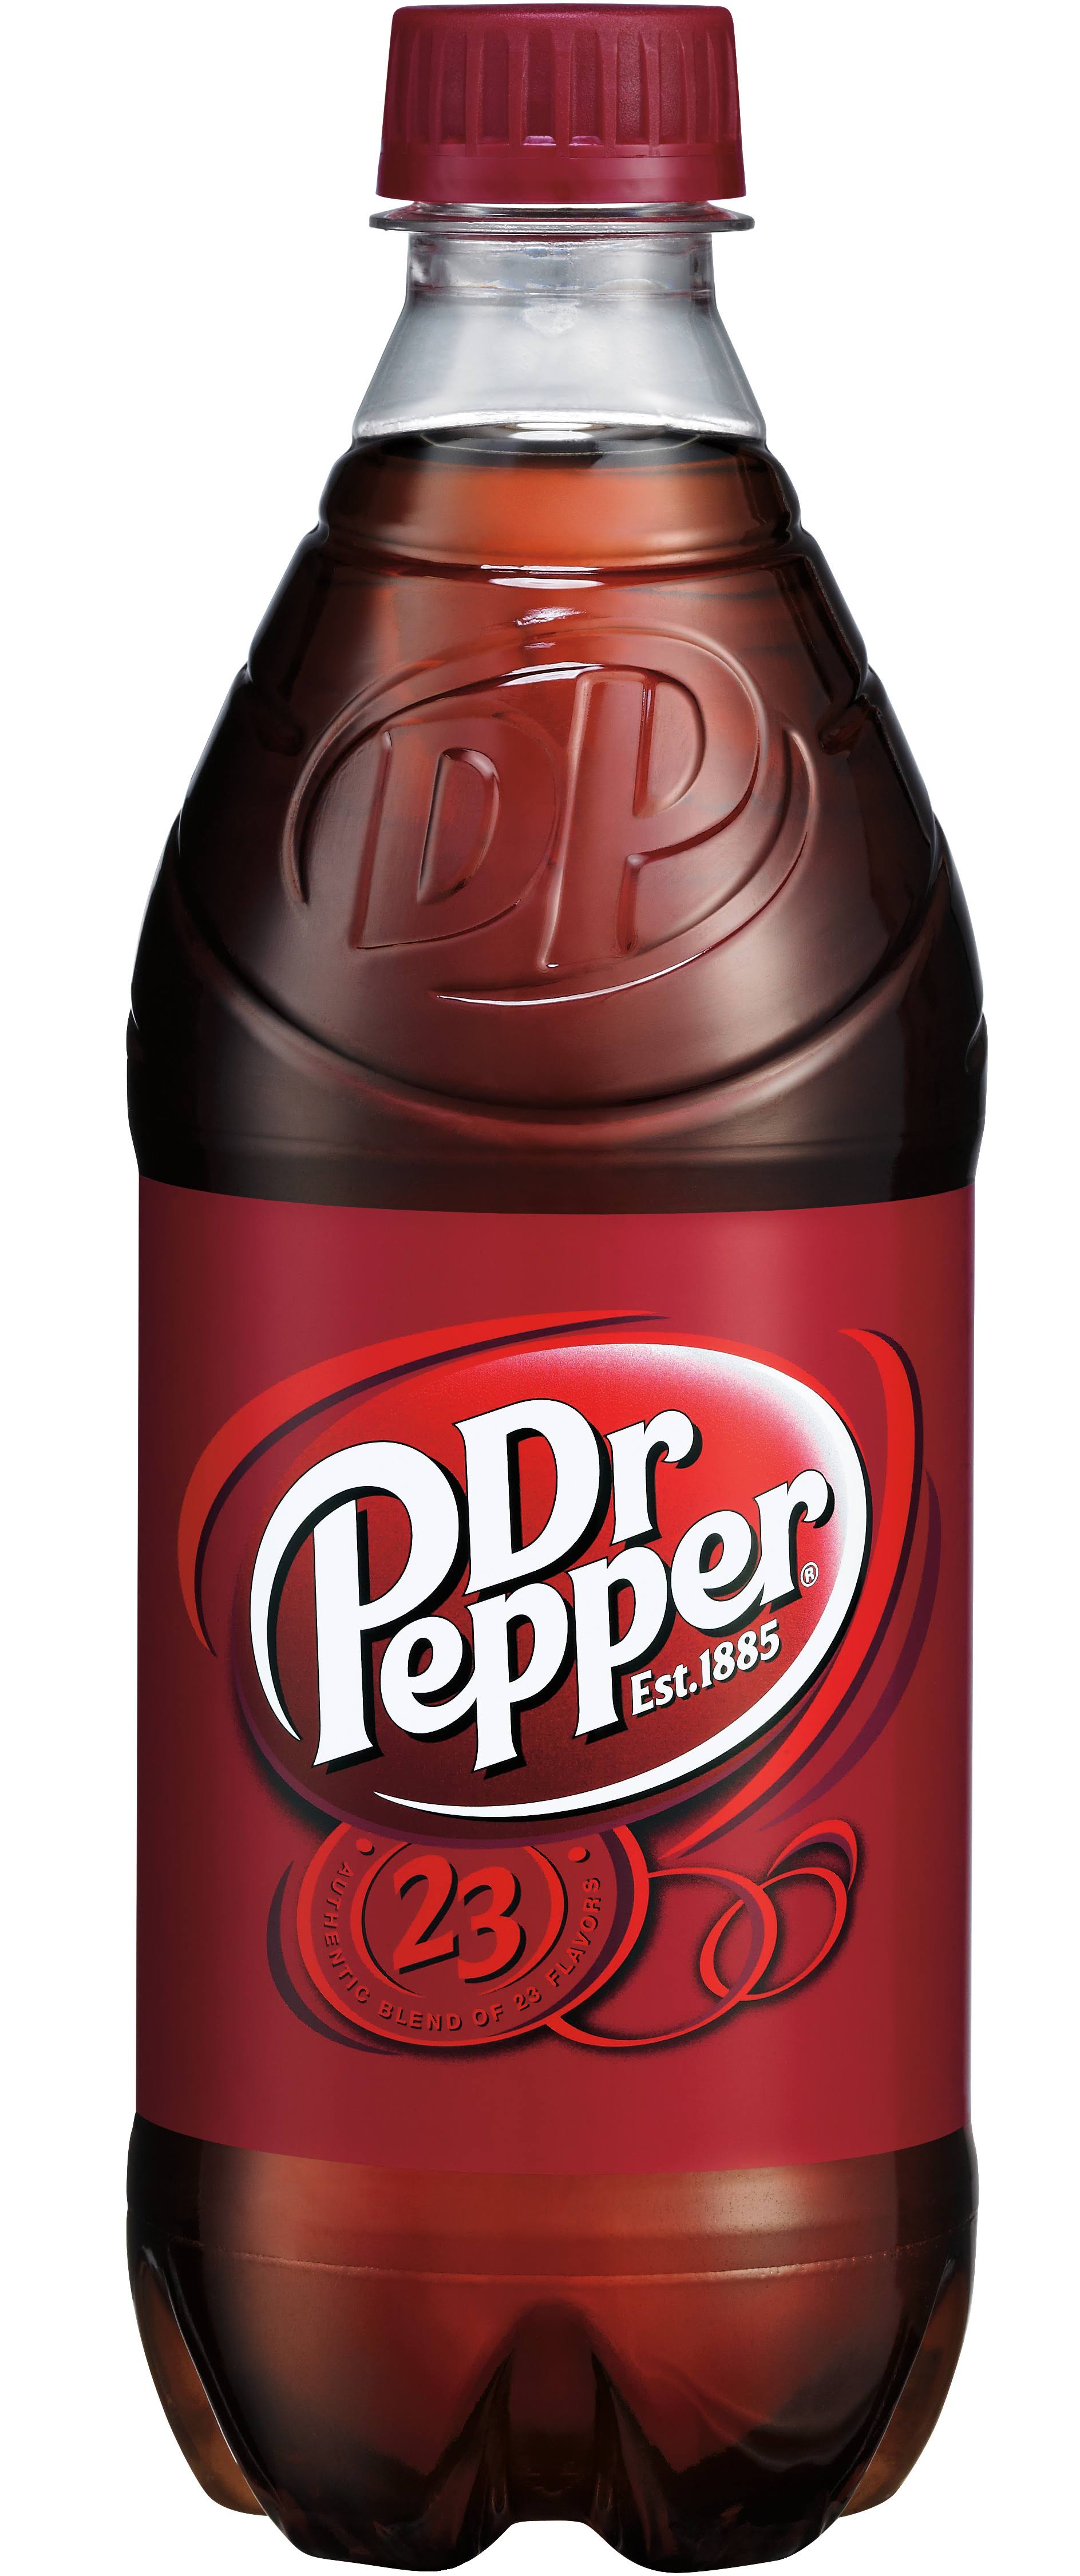 Pepper напиток. Доктор Пеппер классический. Газированная вода доктор Пеппер. Доктор Пеппер Энергетик. Мистер Пеппер напиток.